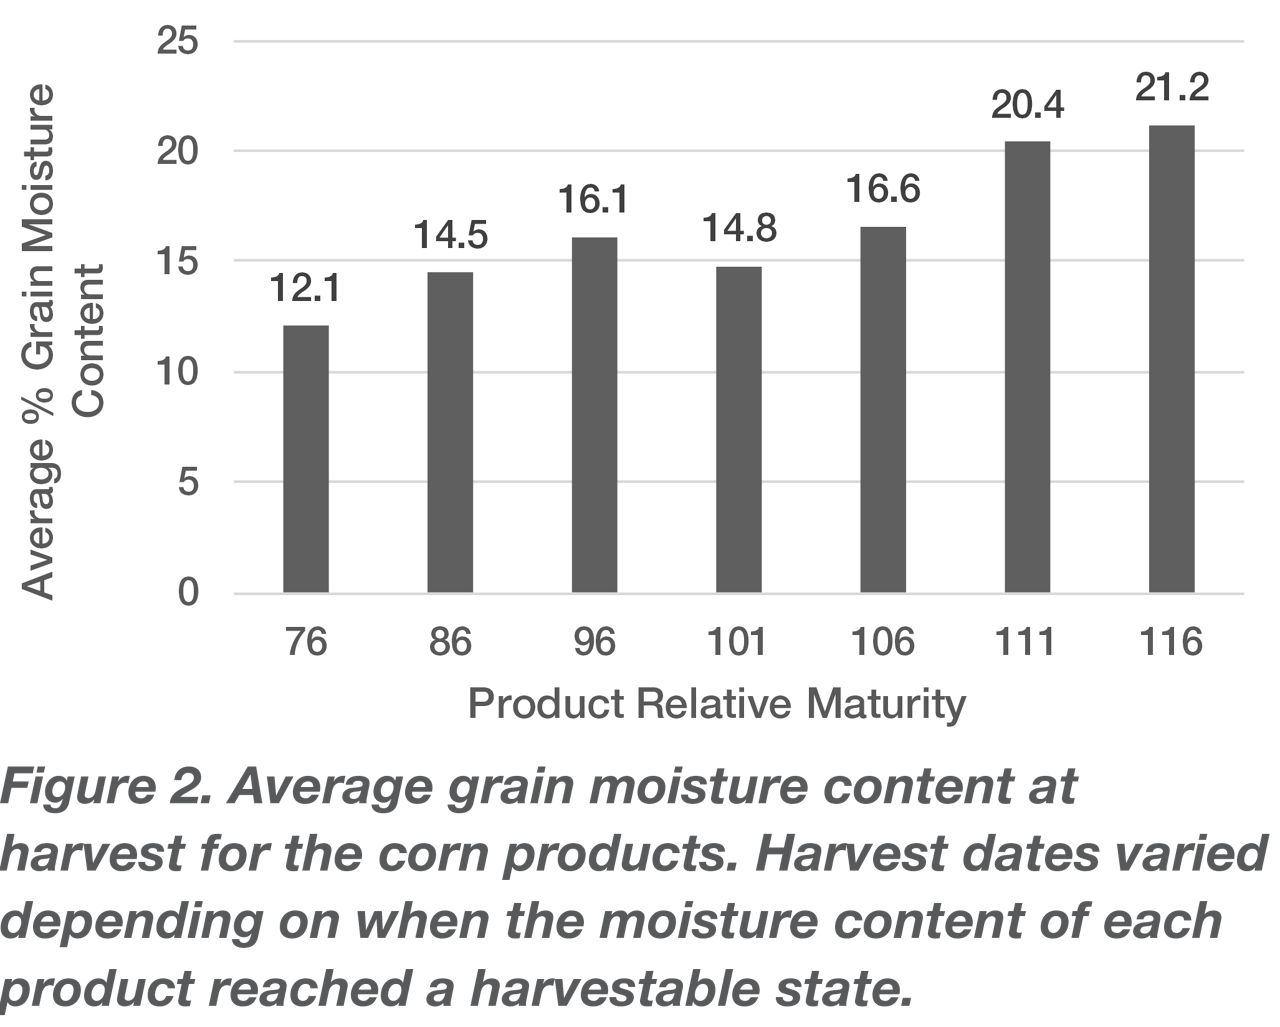 Average grain moisture content at harvest